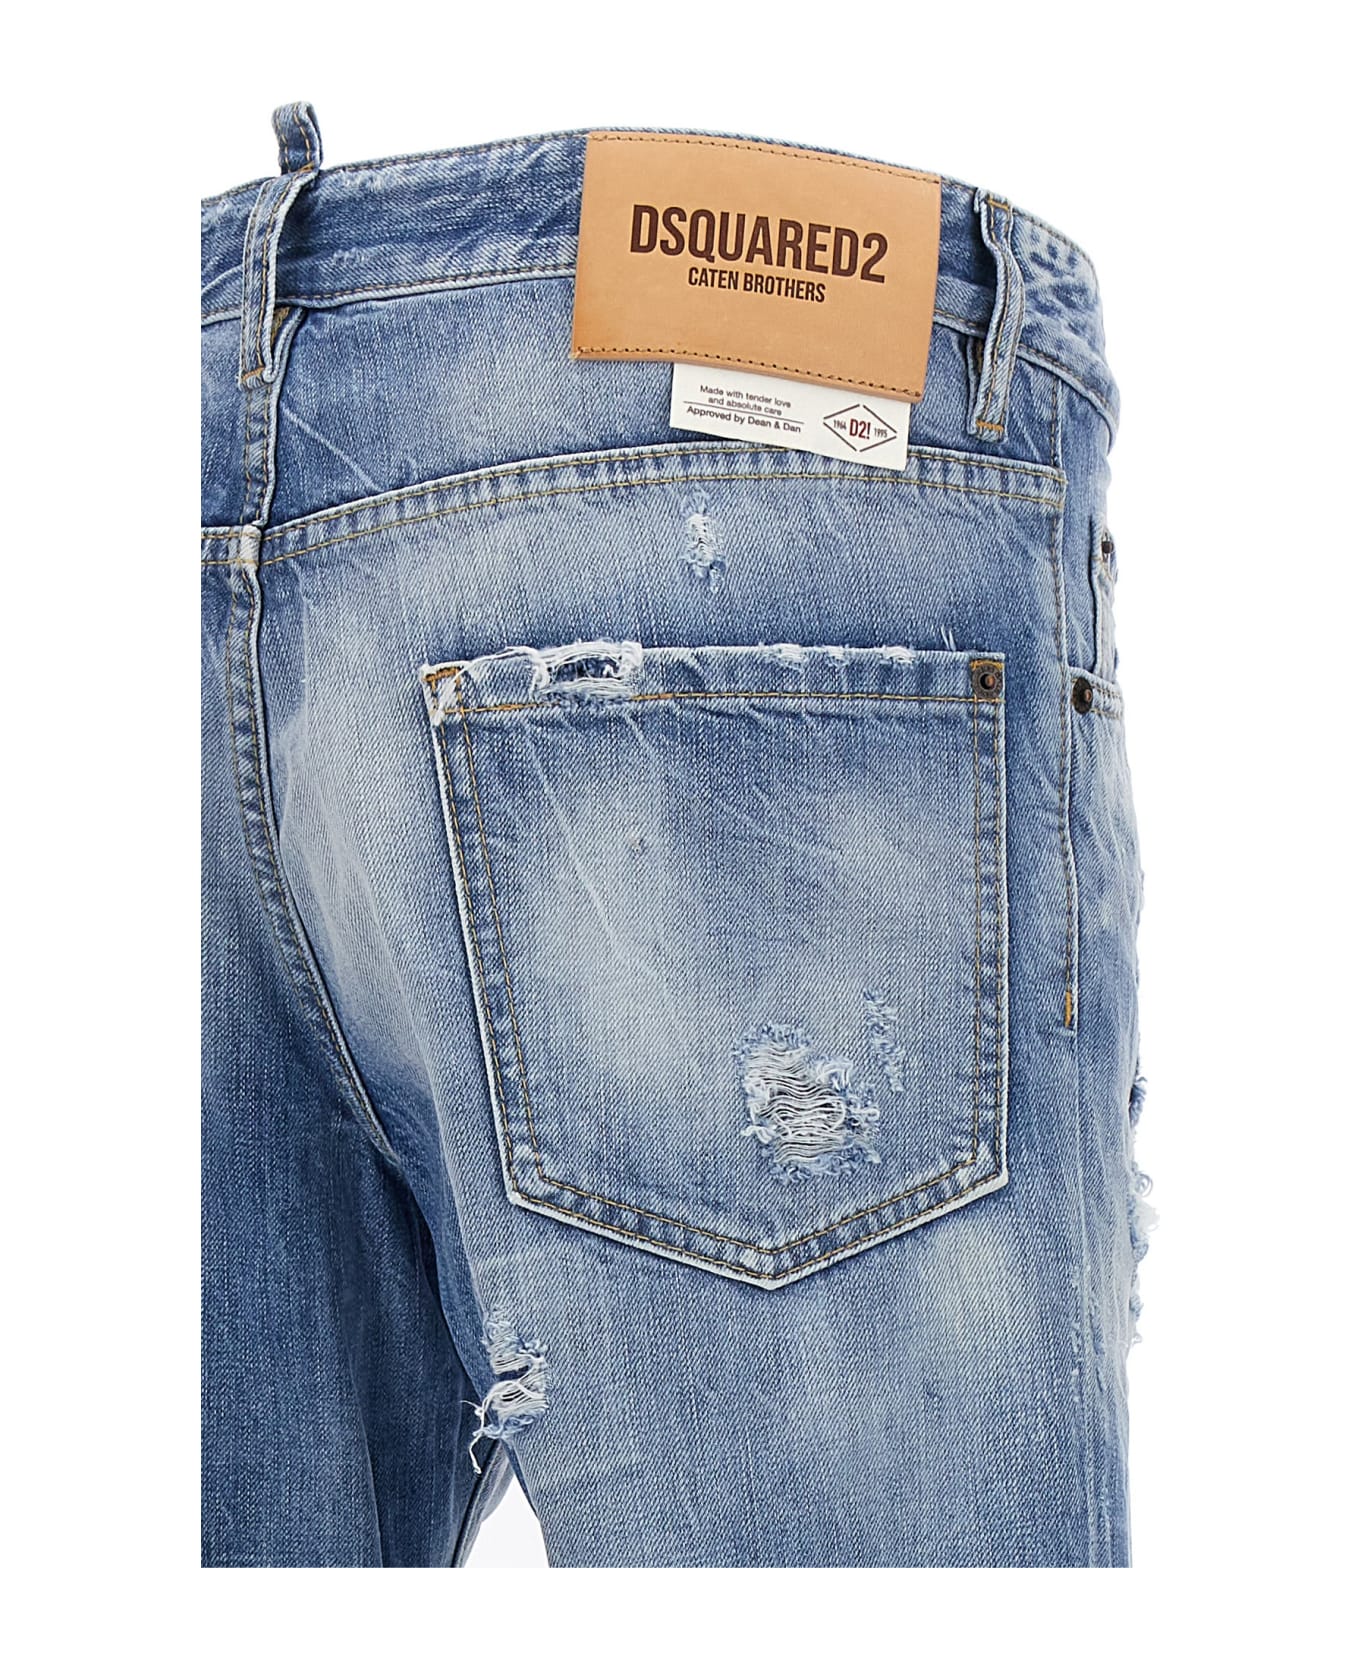 Dsquared2 Cool Guy Jeans - Light Blue デニム